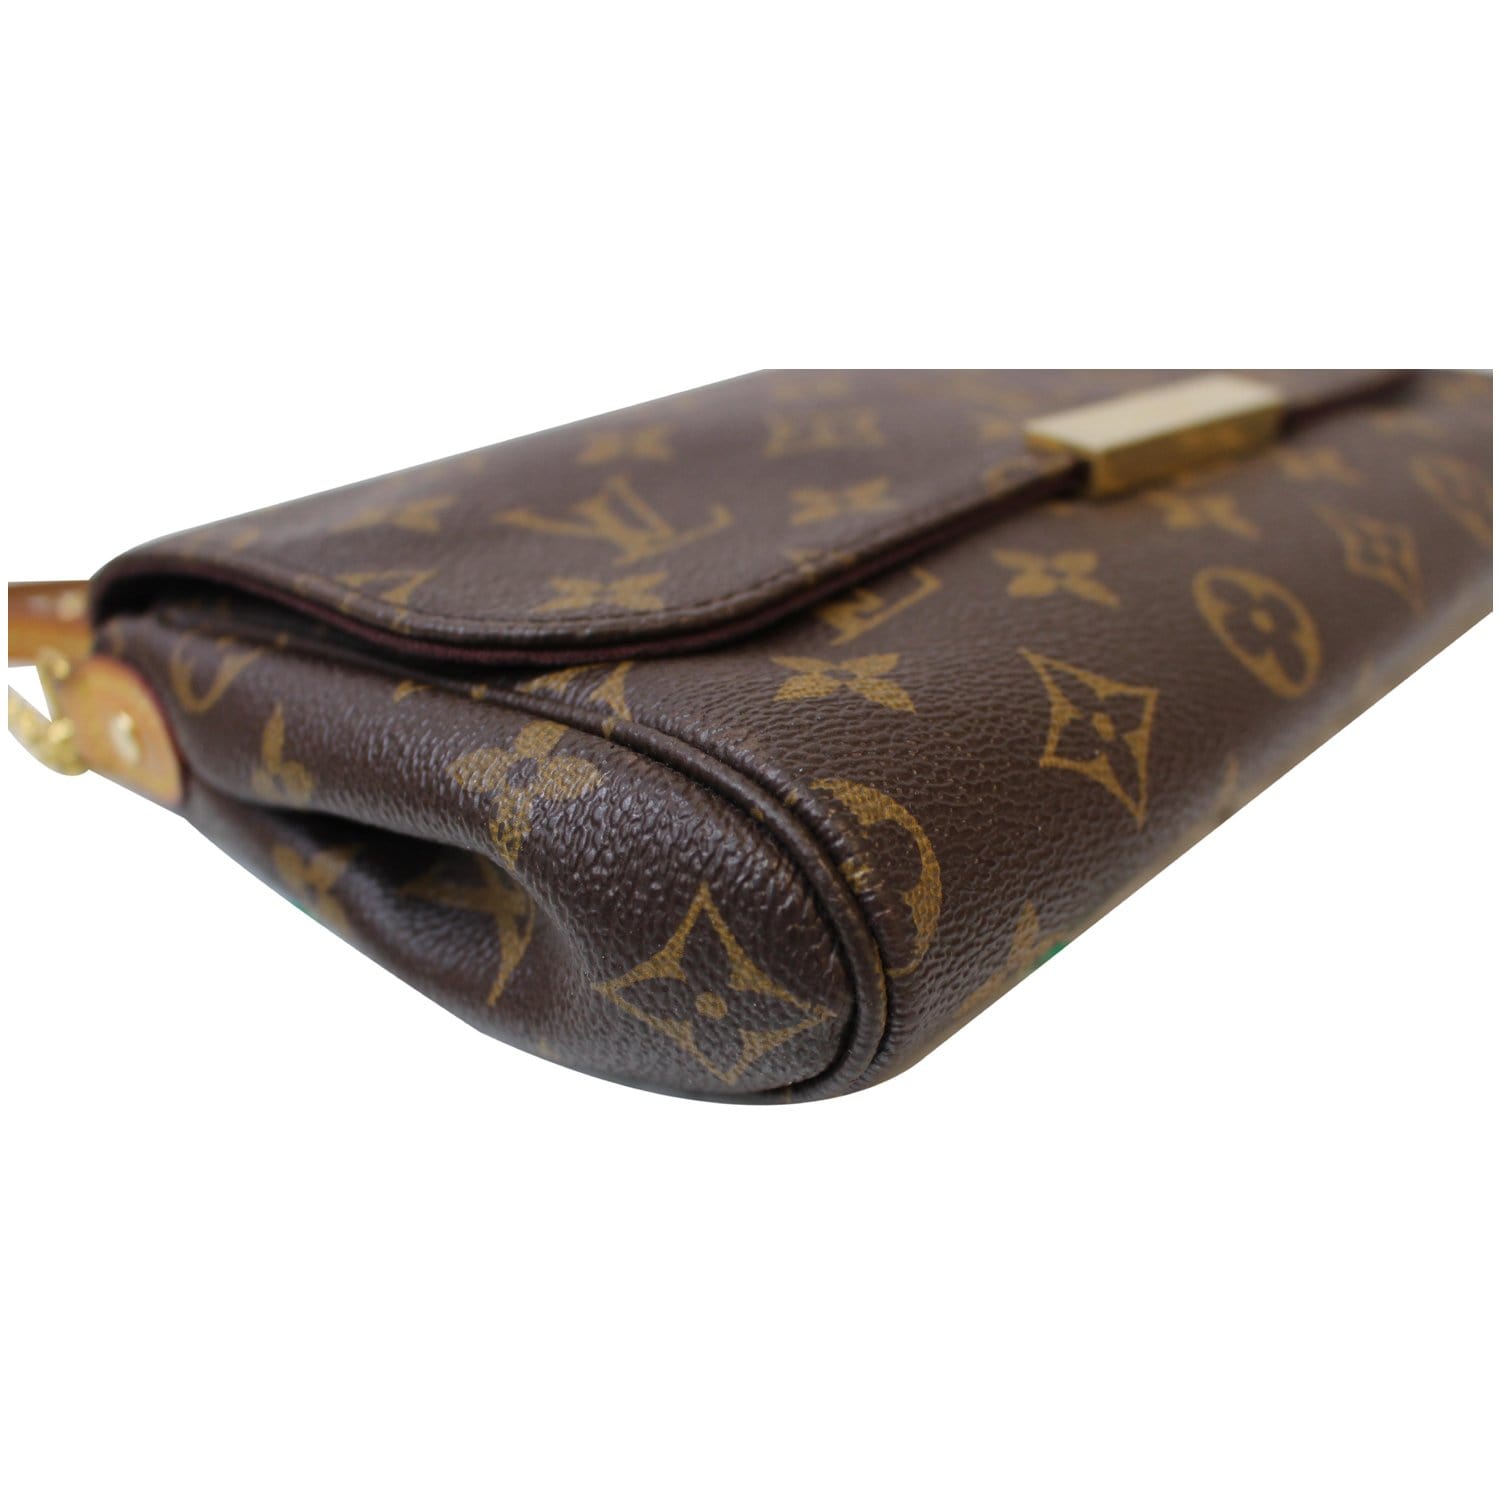 The 10 Best Louis Vuitton Crossbody Bags 